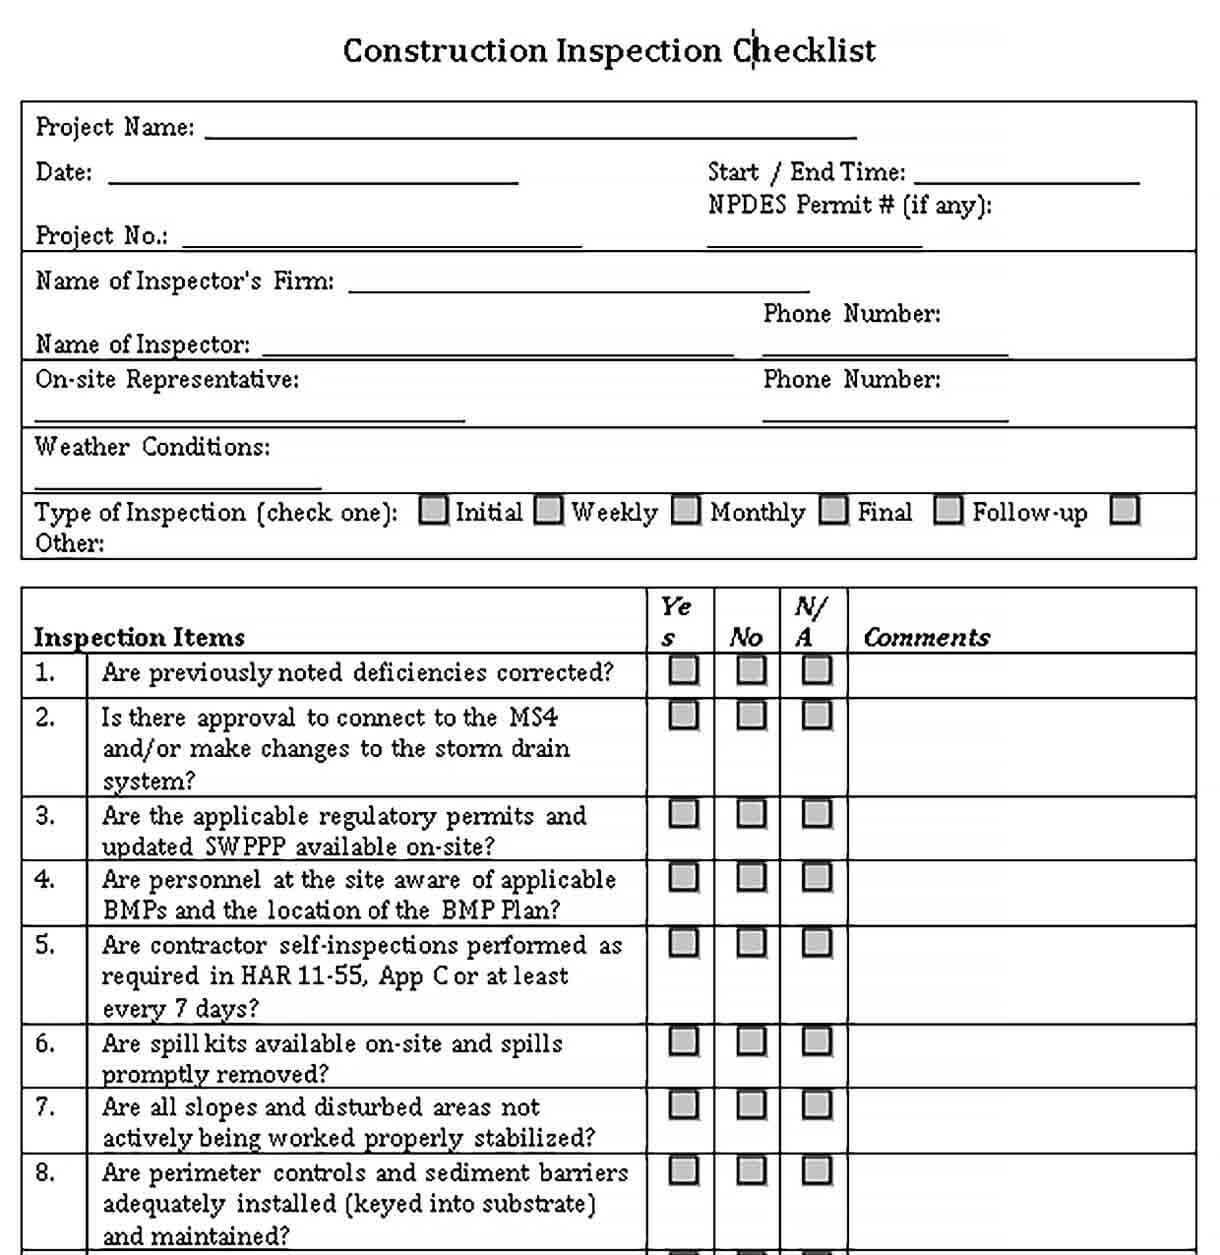 Sample Construction Inspection Checklist